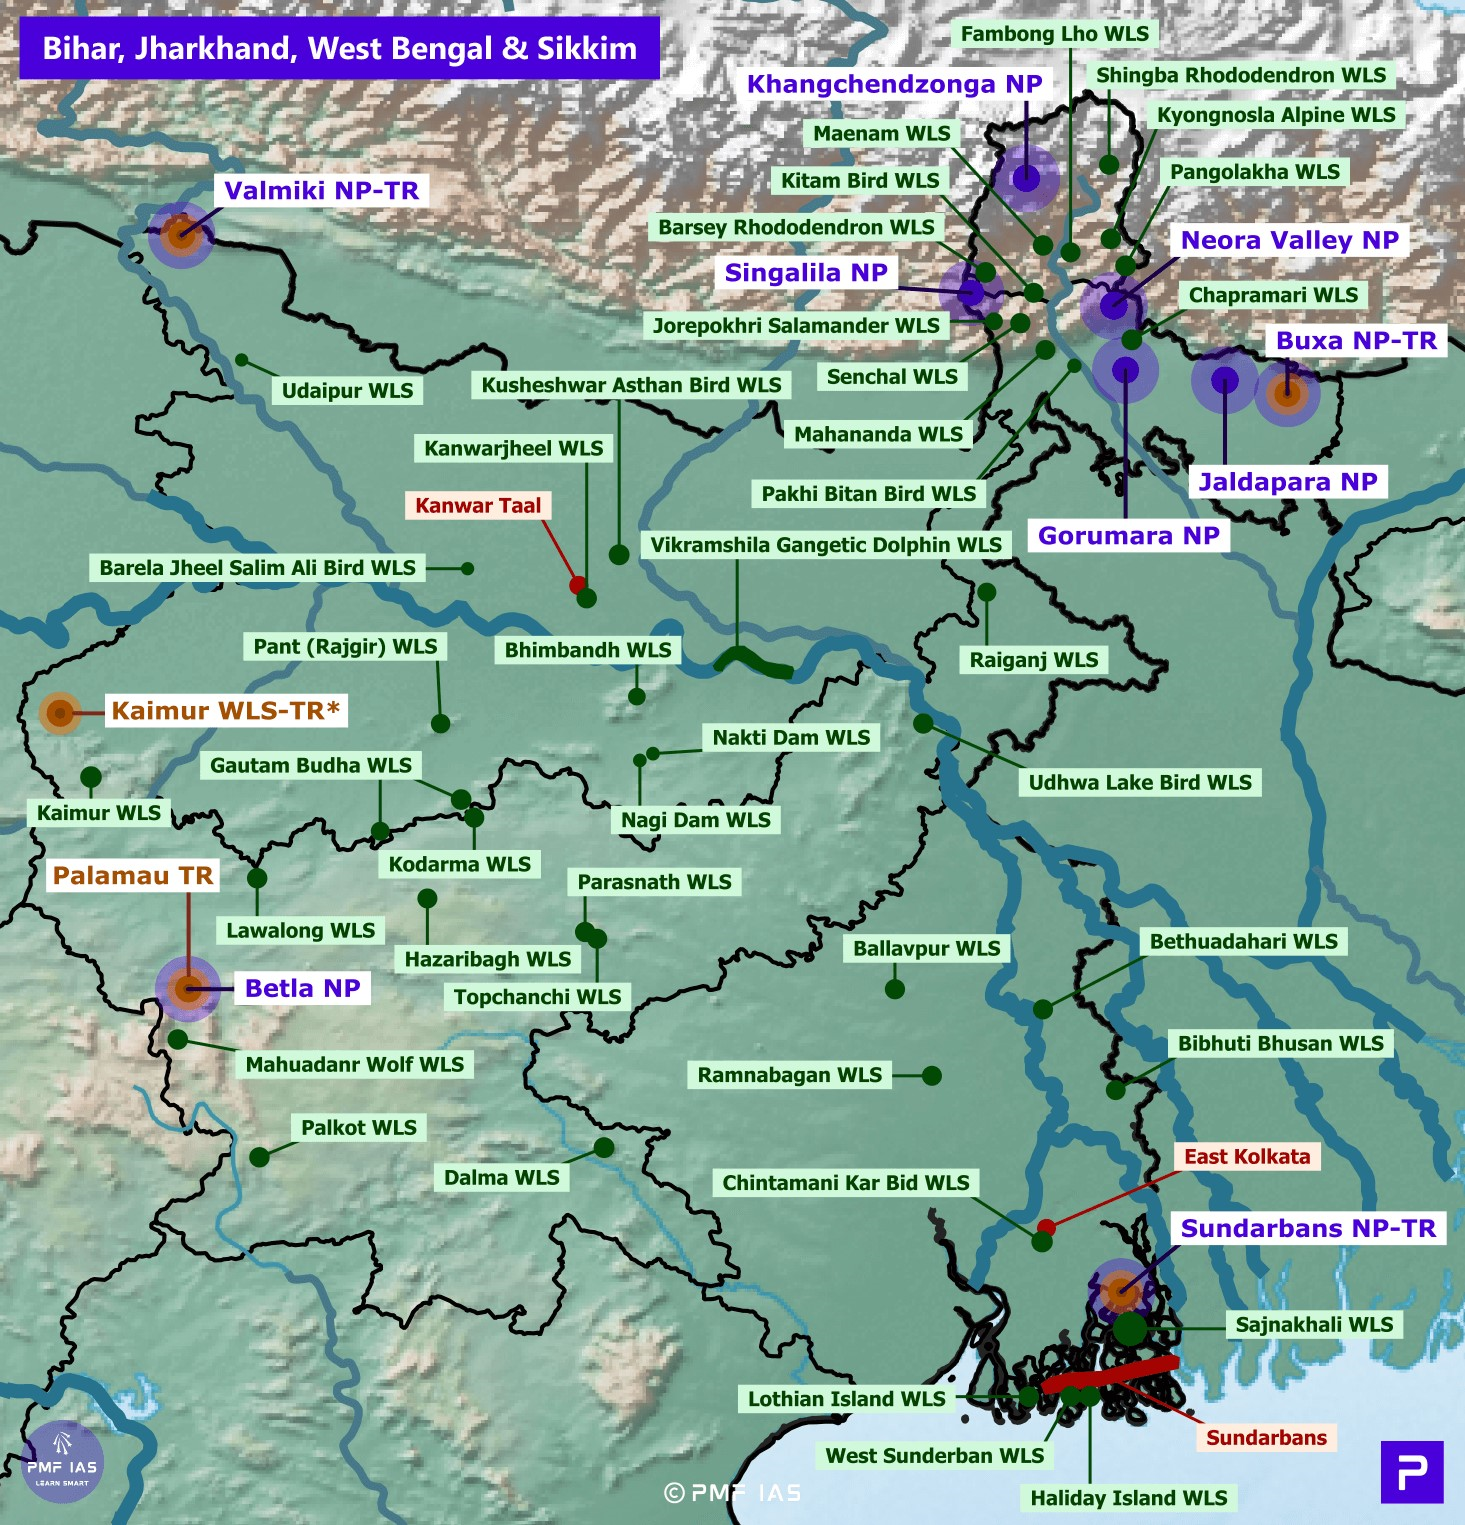 National Parks Tiger Reserves Wildlife Sanctuaries and Ramsar Sites of Bihar Jharkhand West Bengal Sikkim